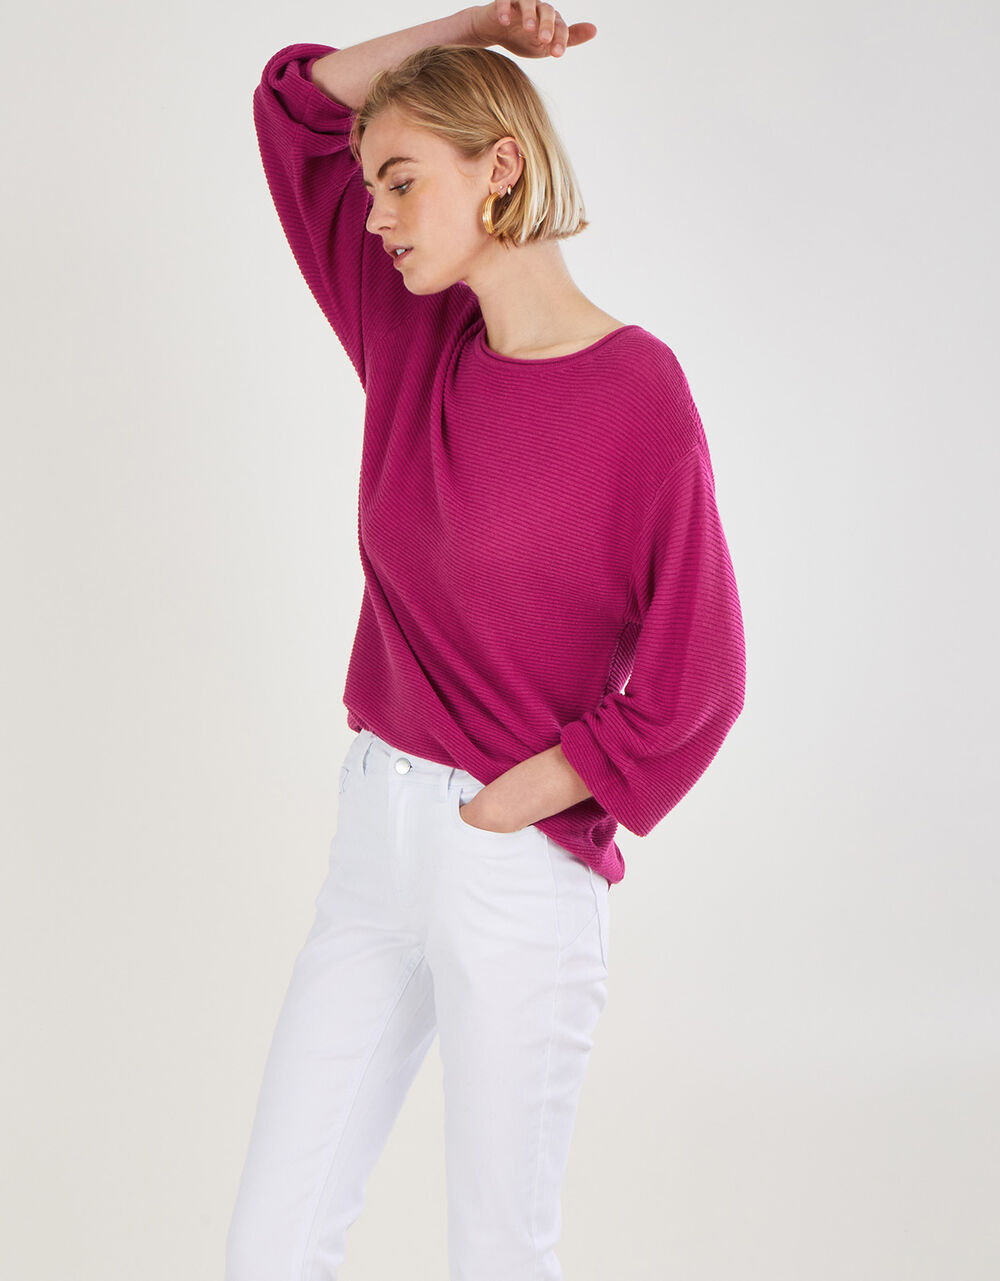 Women Women's Clothing | Rib Slash Neck Tunic in Linen Blend Pink - VZ06212